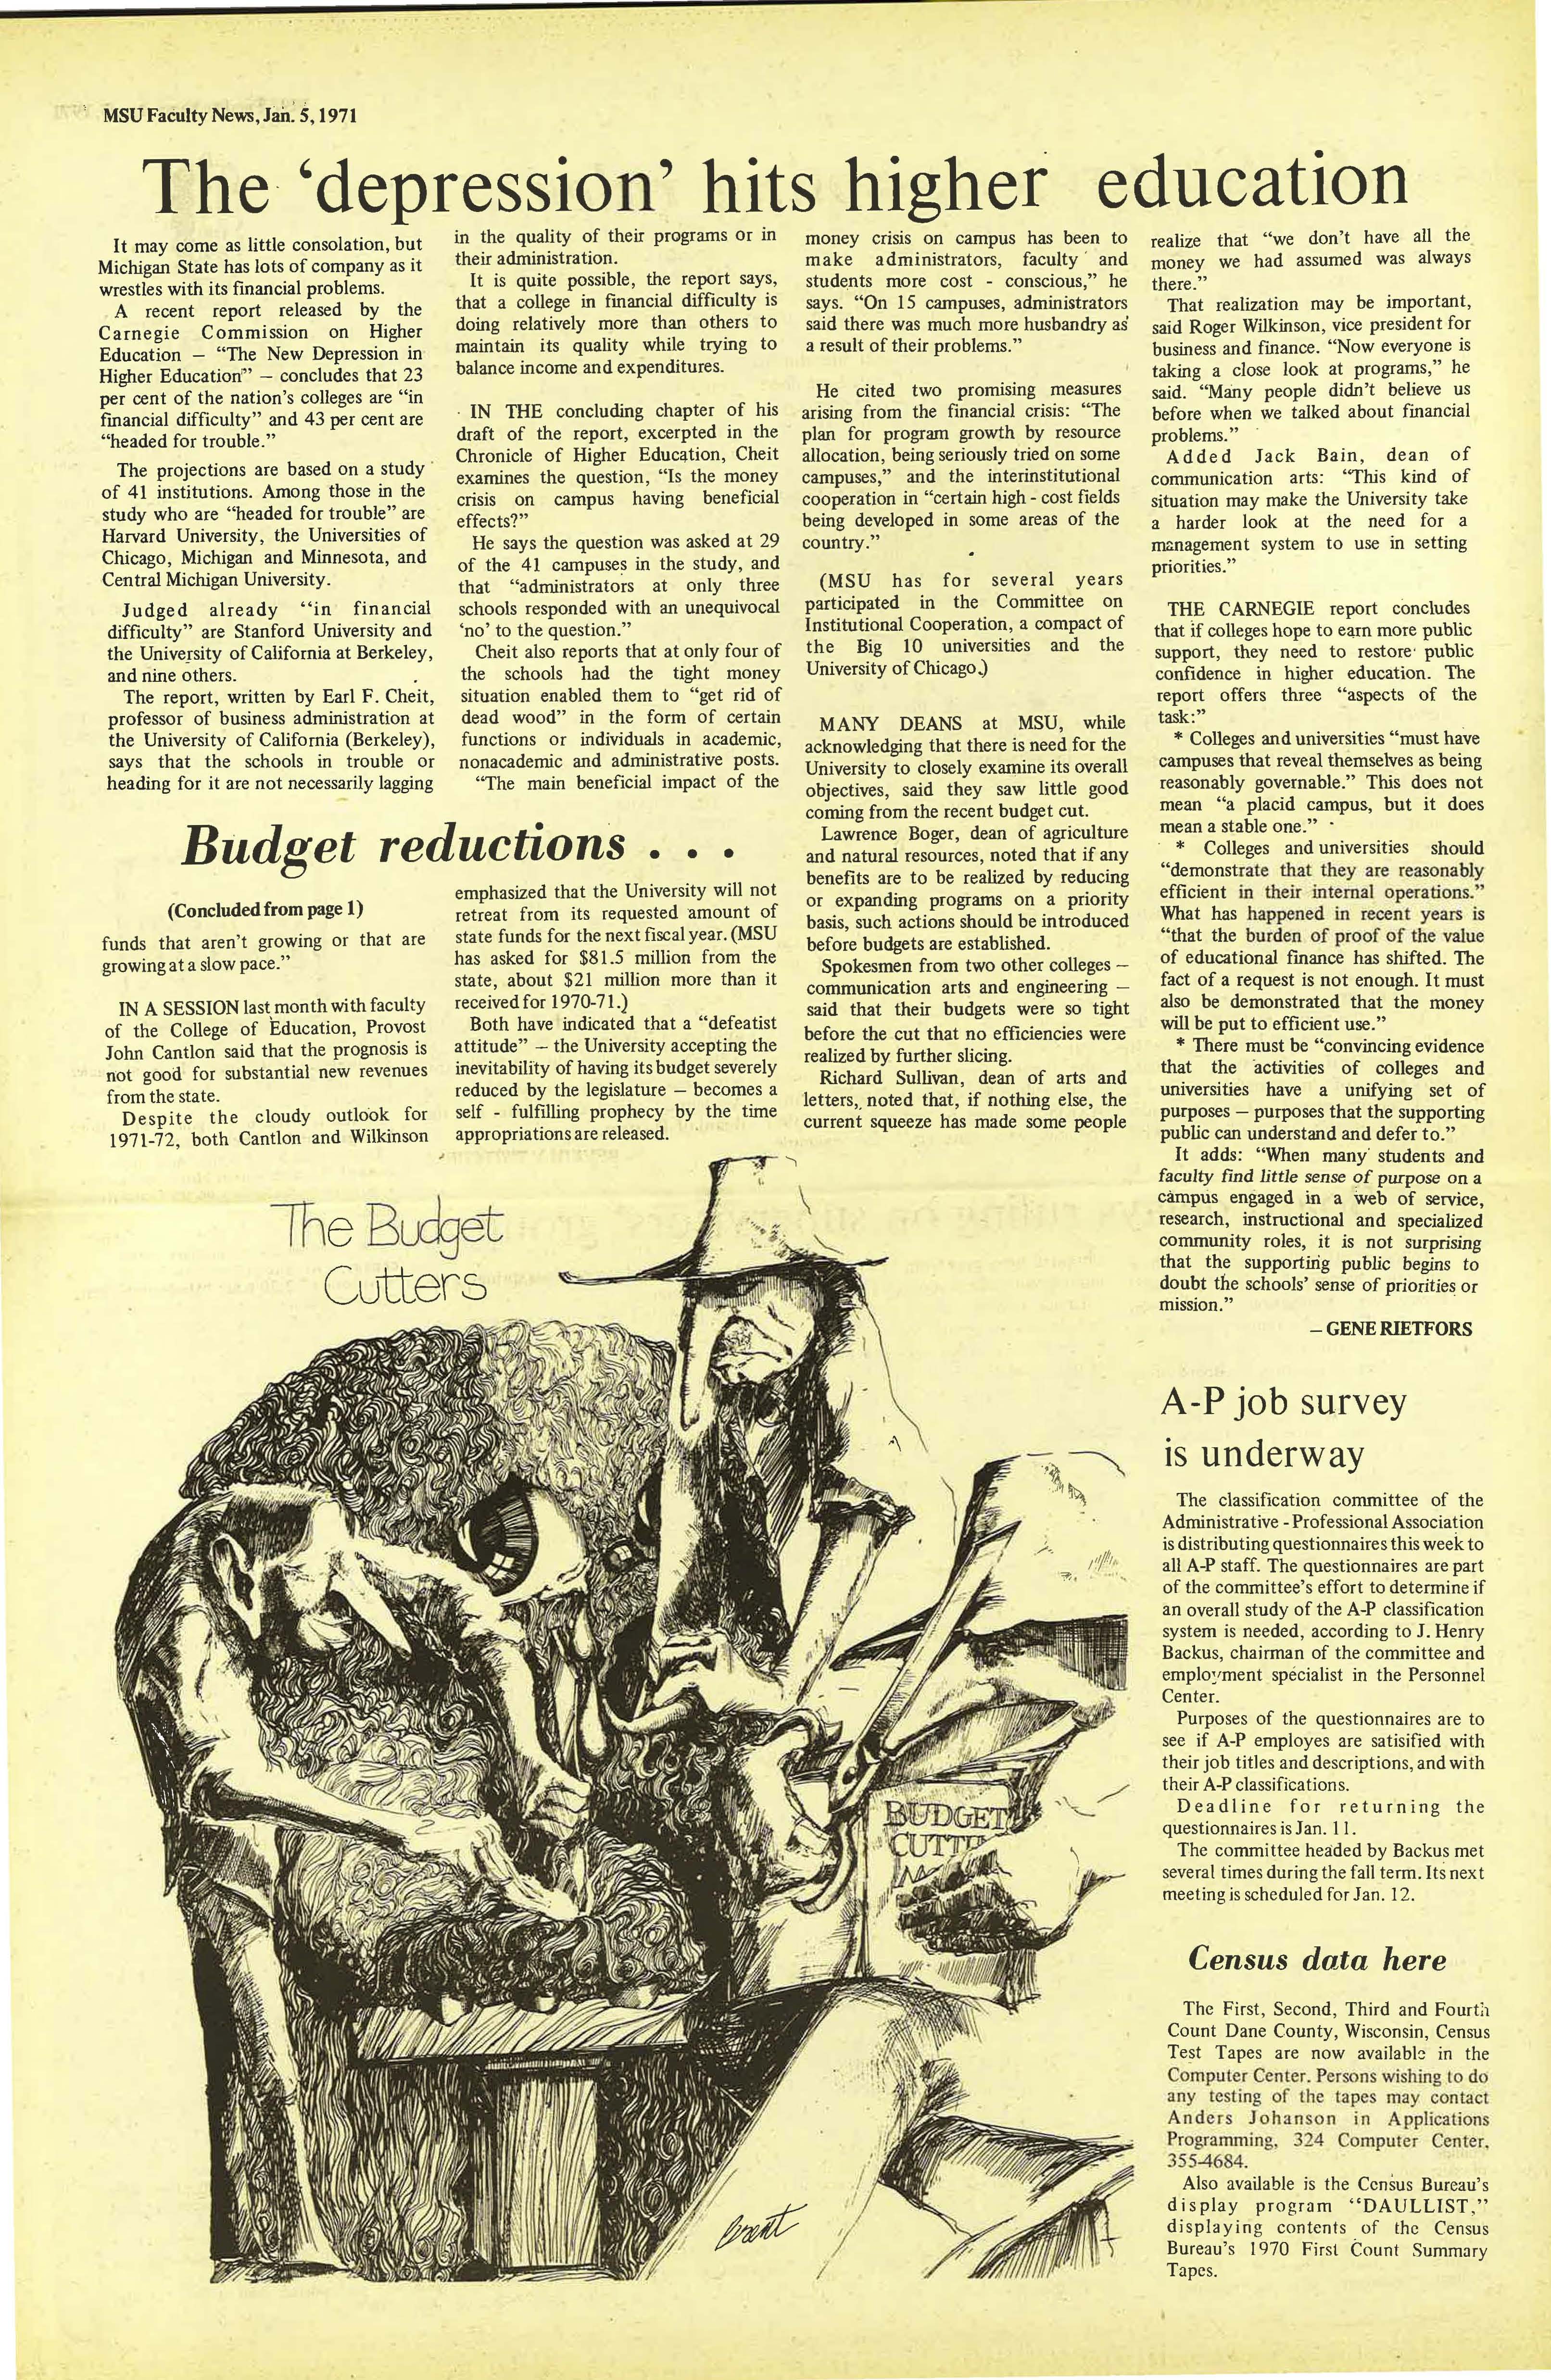 MSU News Bulletin, Vol. 2, No. 15, February 2, 1971